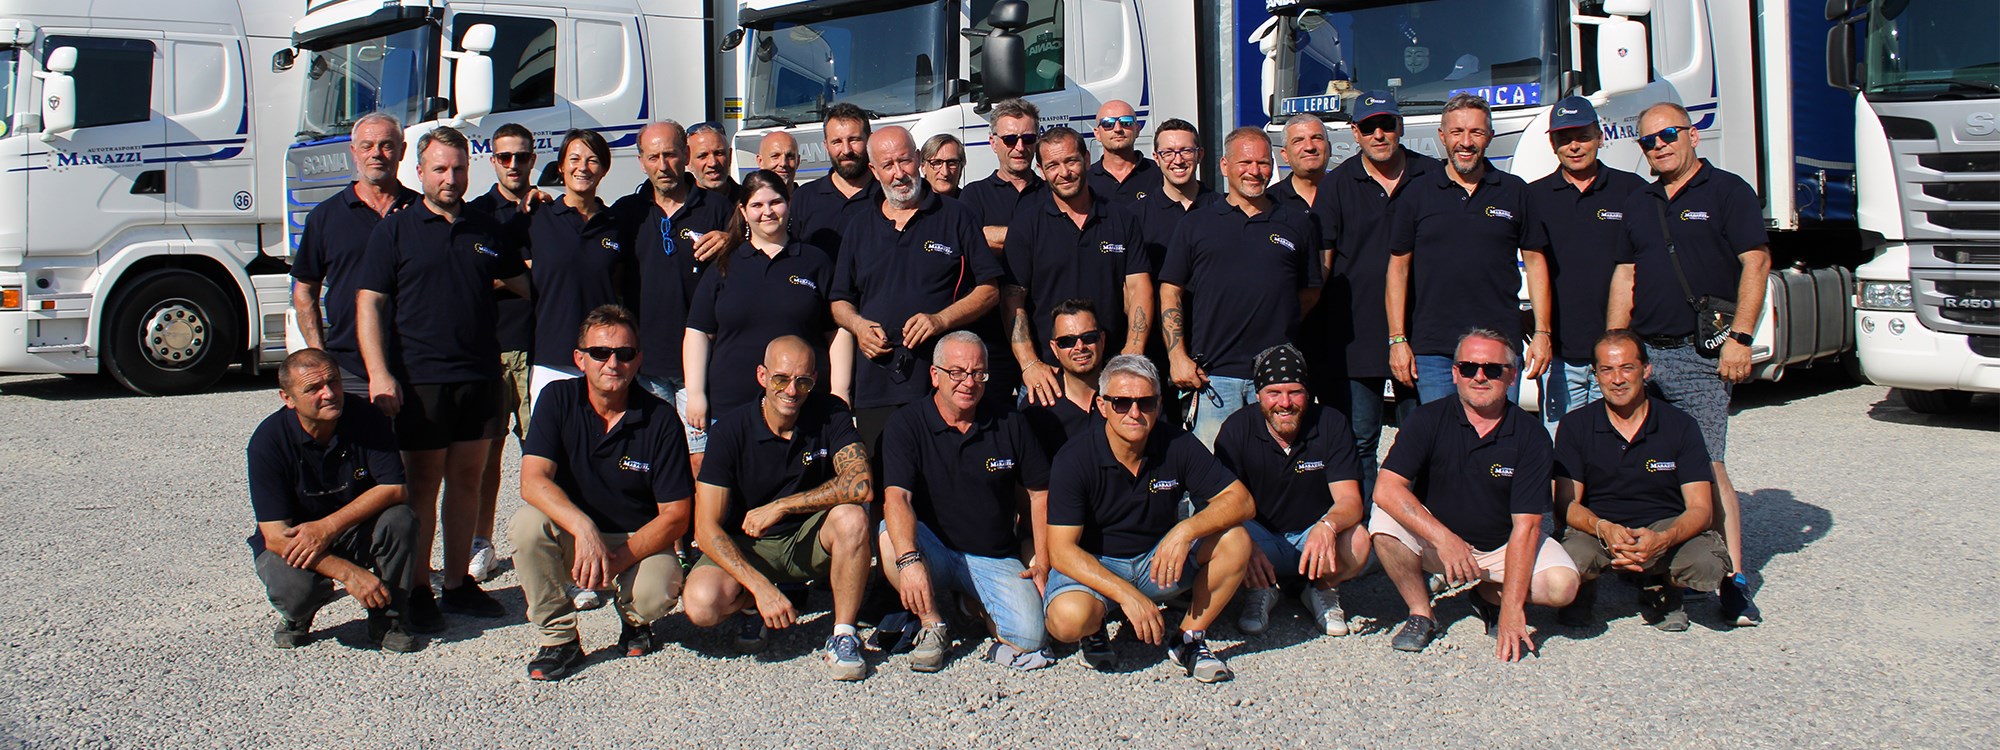 Team Marazzi Autotrasporti Piacenza